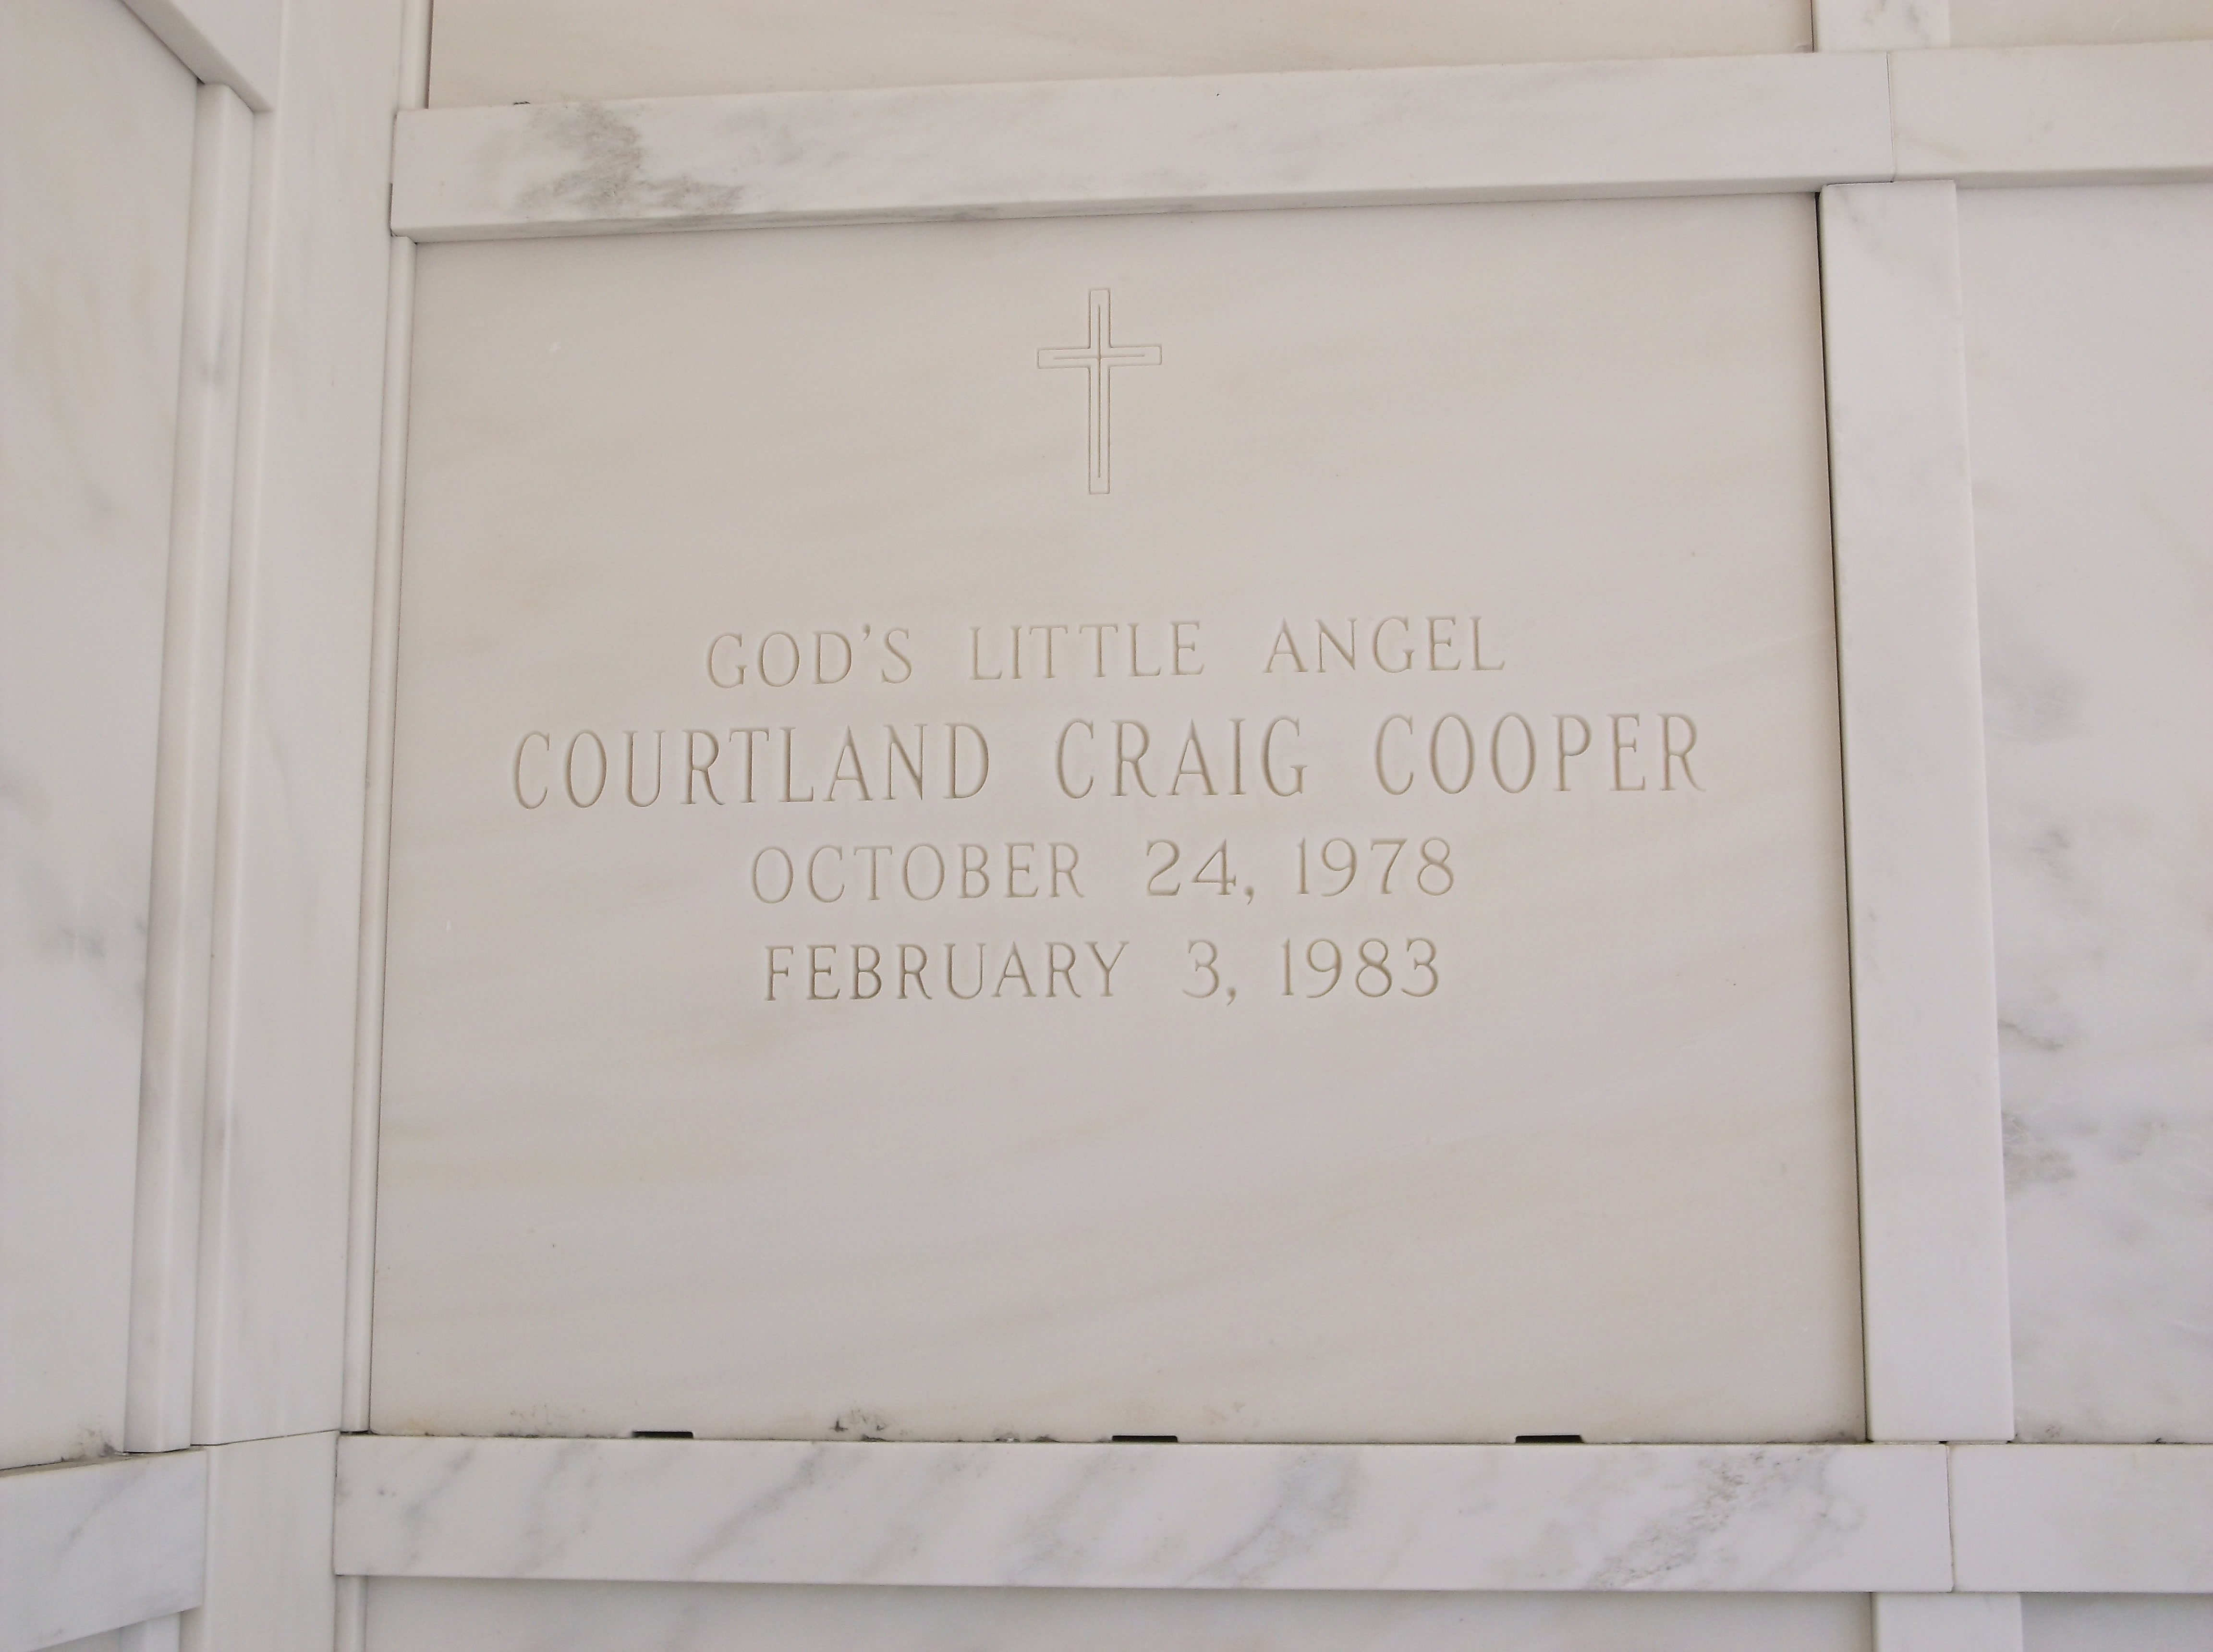 Courtland Craig Cooper